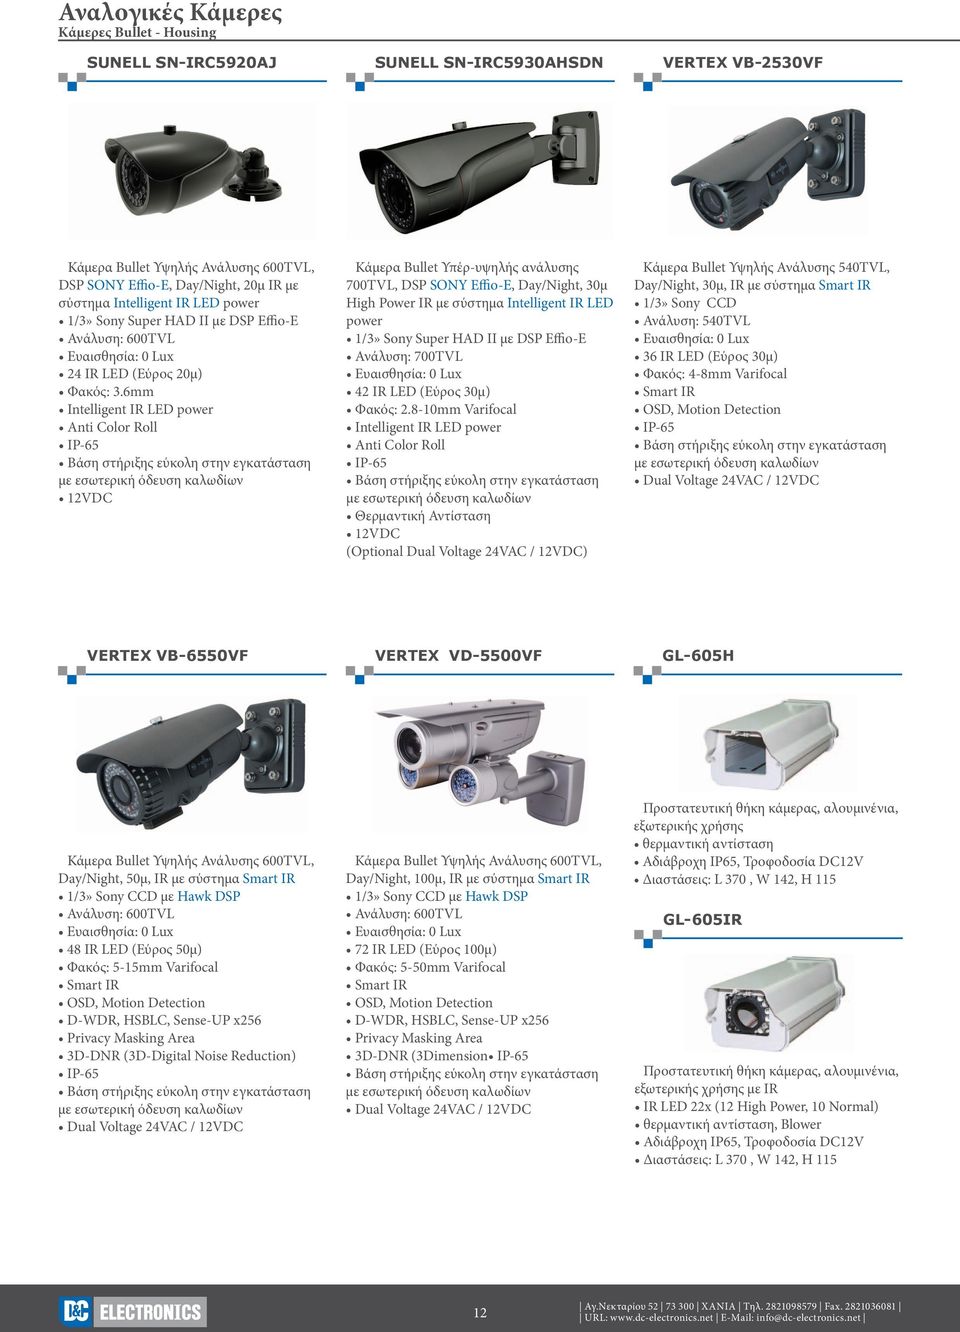 6mm Intelligent IR LED power IP-65 Βάση στήριξης εύκολη στην εγκατάσταση με εσωτερική όδευση καλωδίων Κάμερα Bullet Υπέρ-υψηλής ανάλυσης 700TVL, DSP SONY Effio-E, Day/Night, 30μ High Power IR με